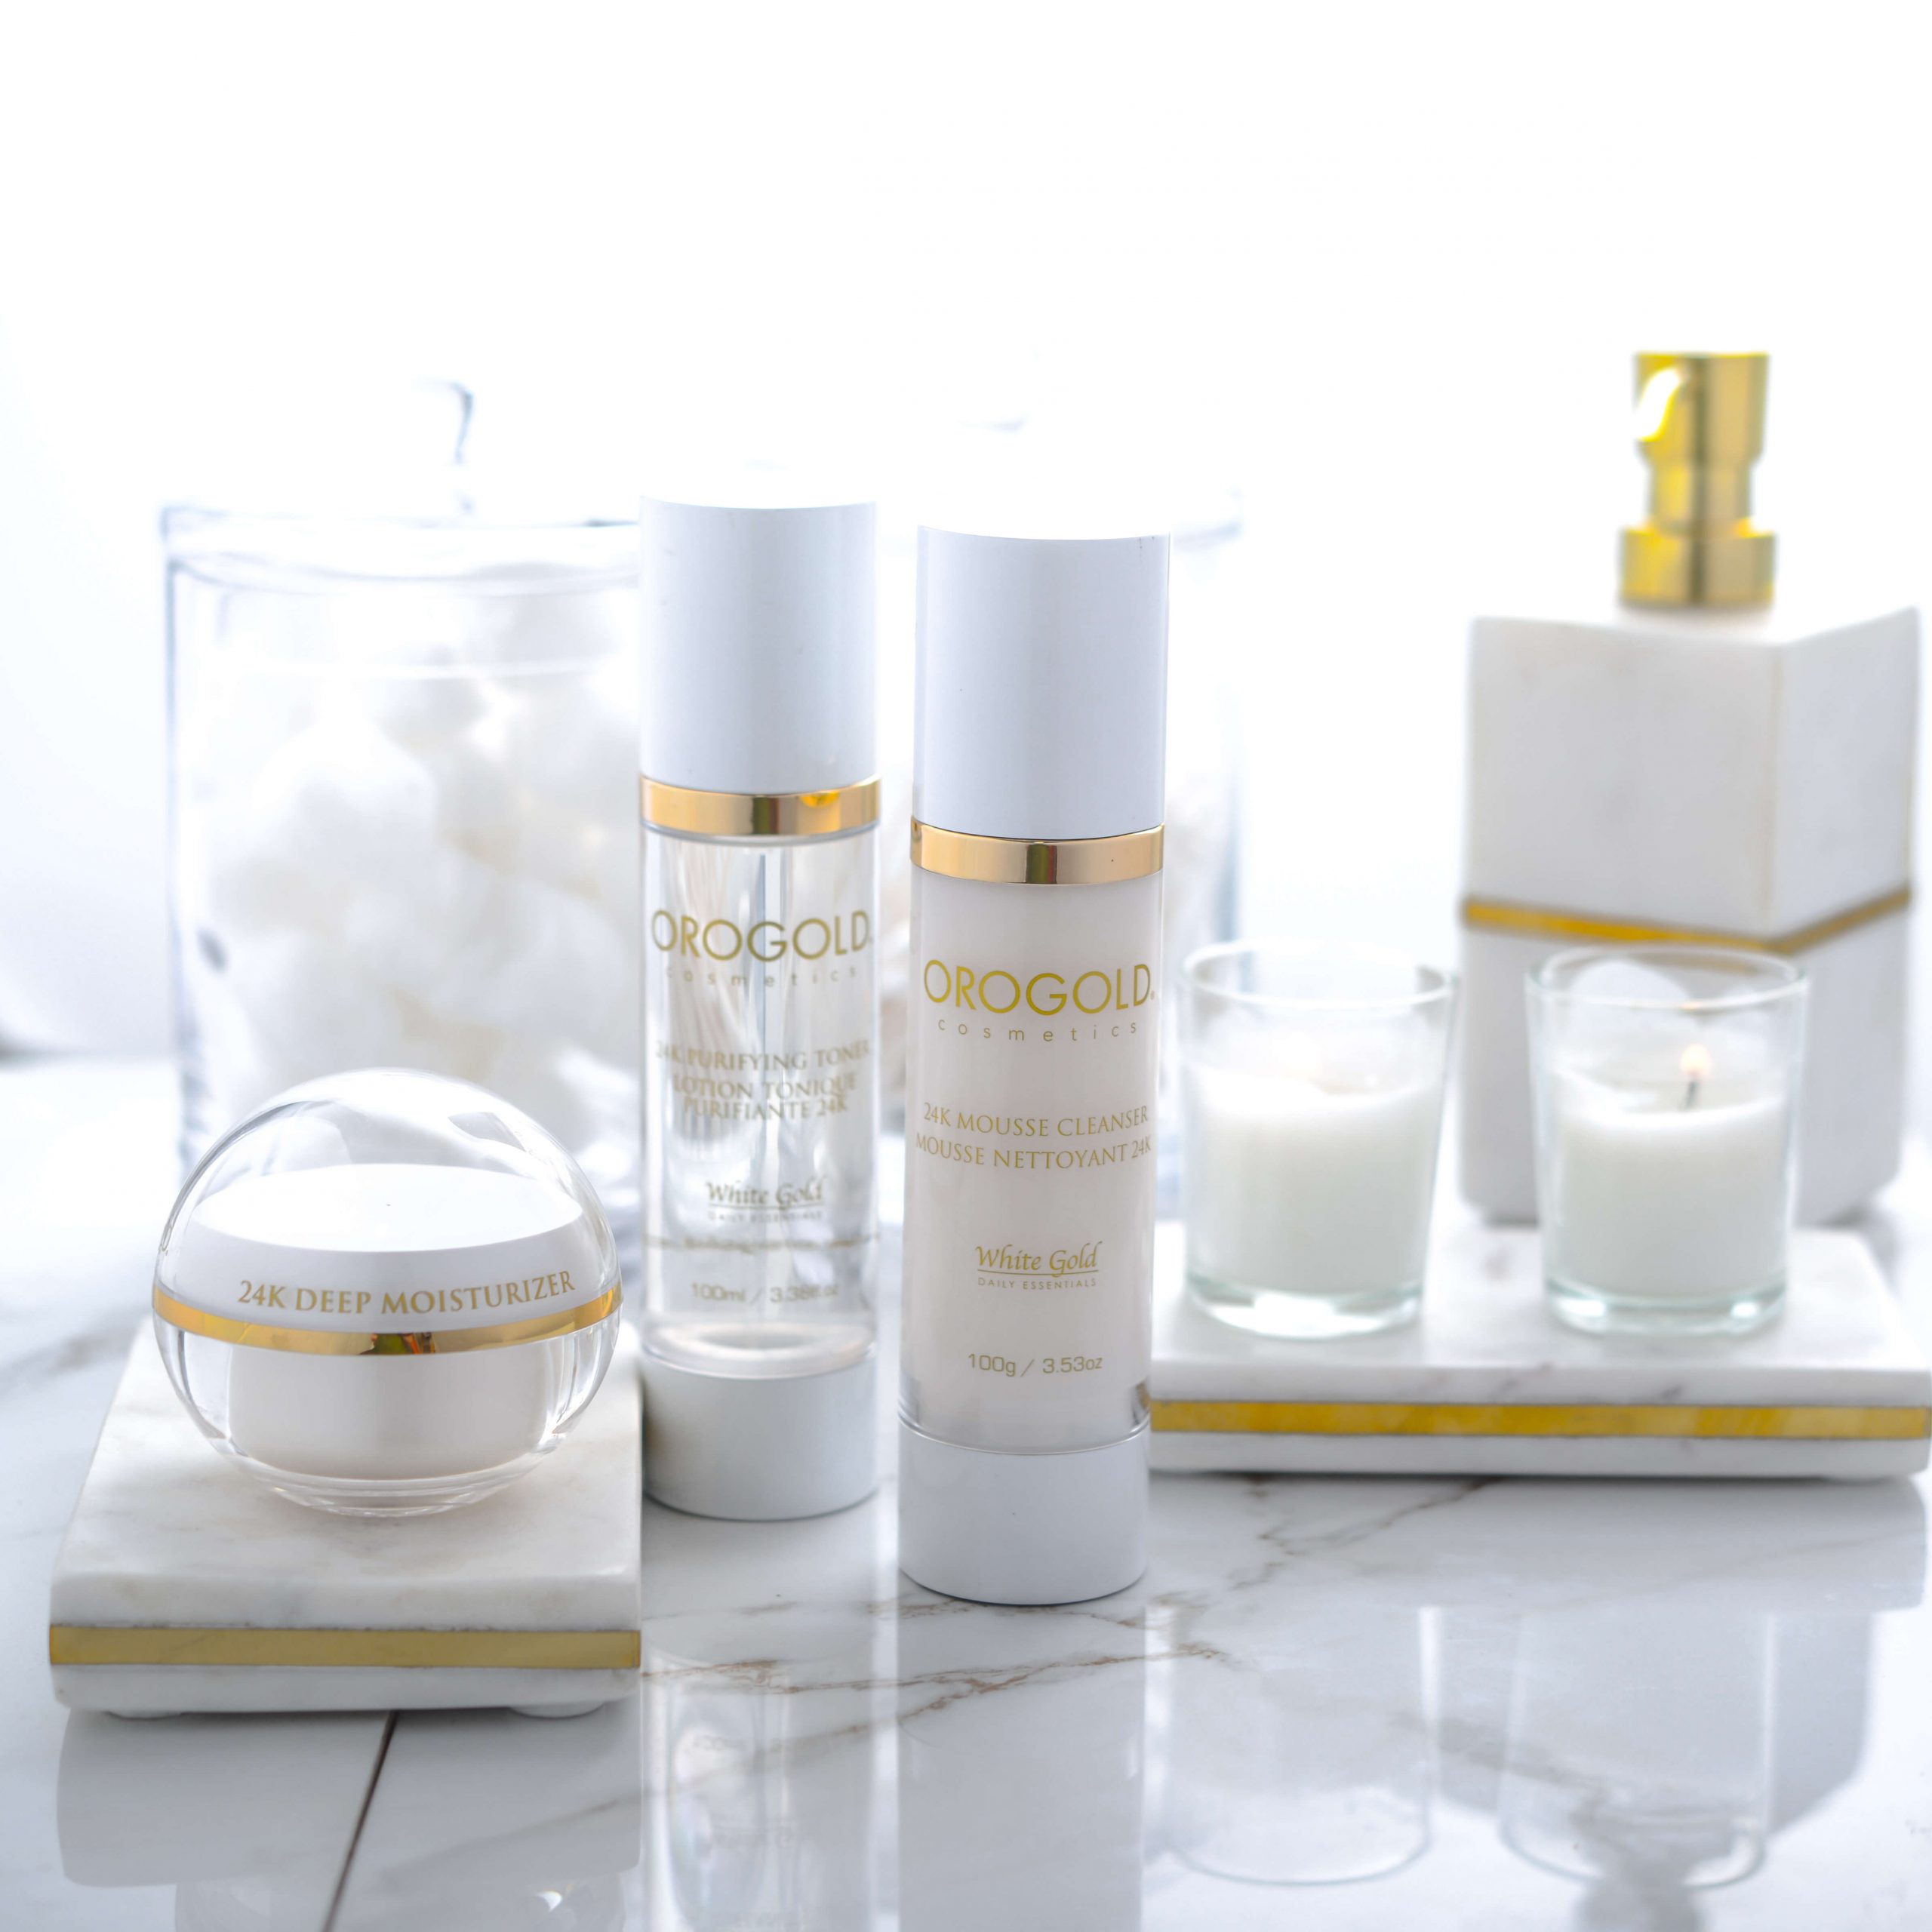 OROGOLD cleanser, toner, and moisturizer for summer skin care